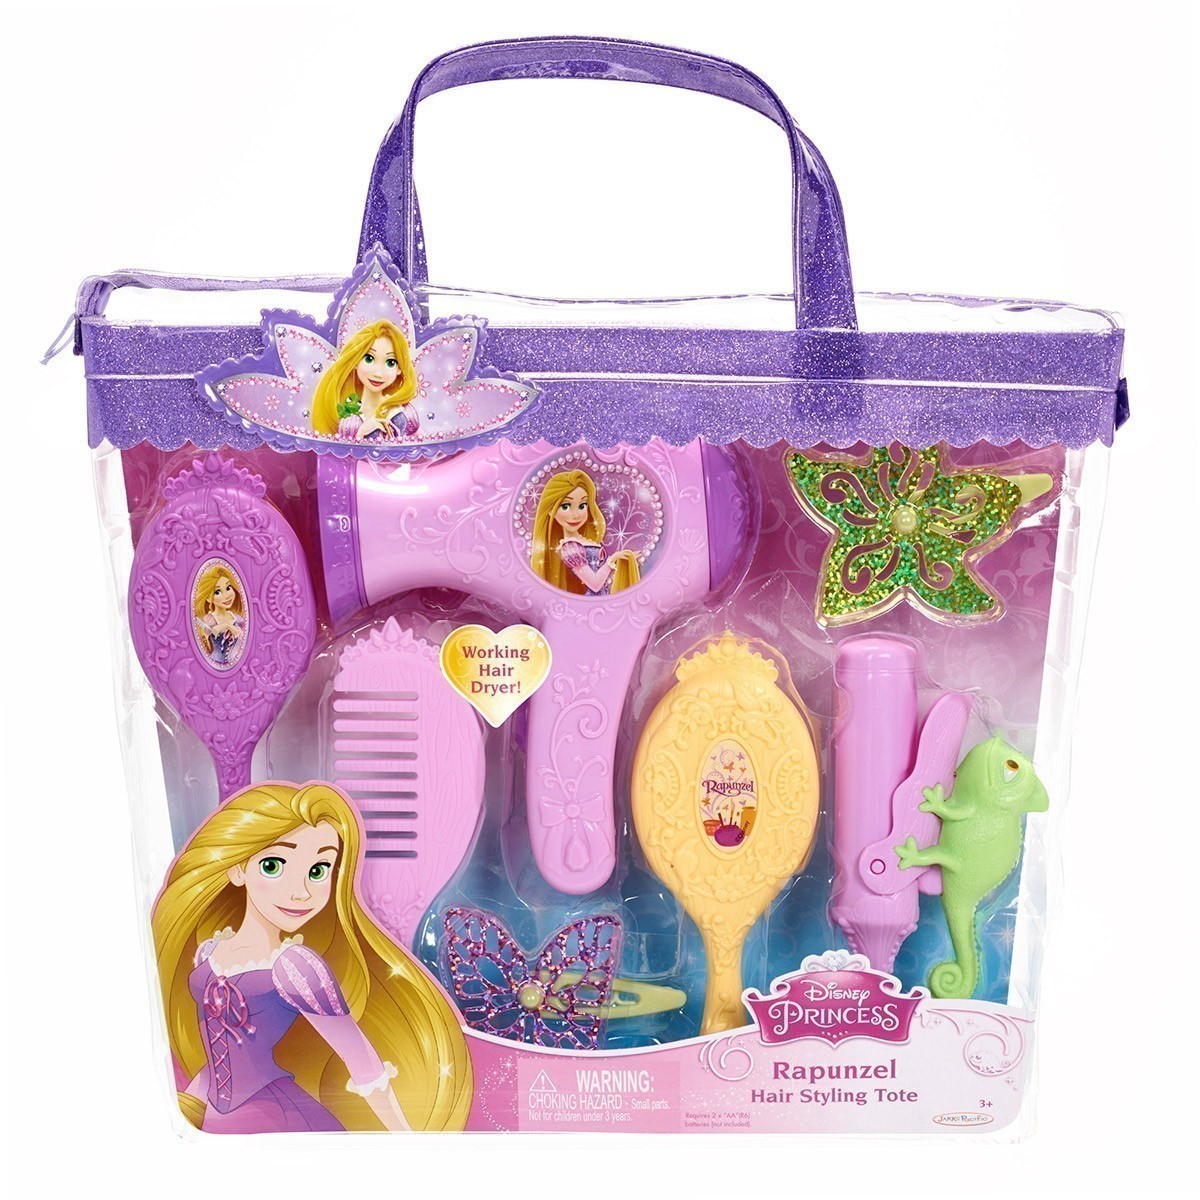 Disney Princess - Rapunzel Hair Styling Tote